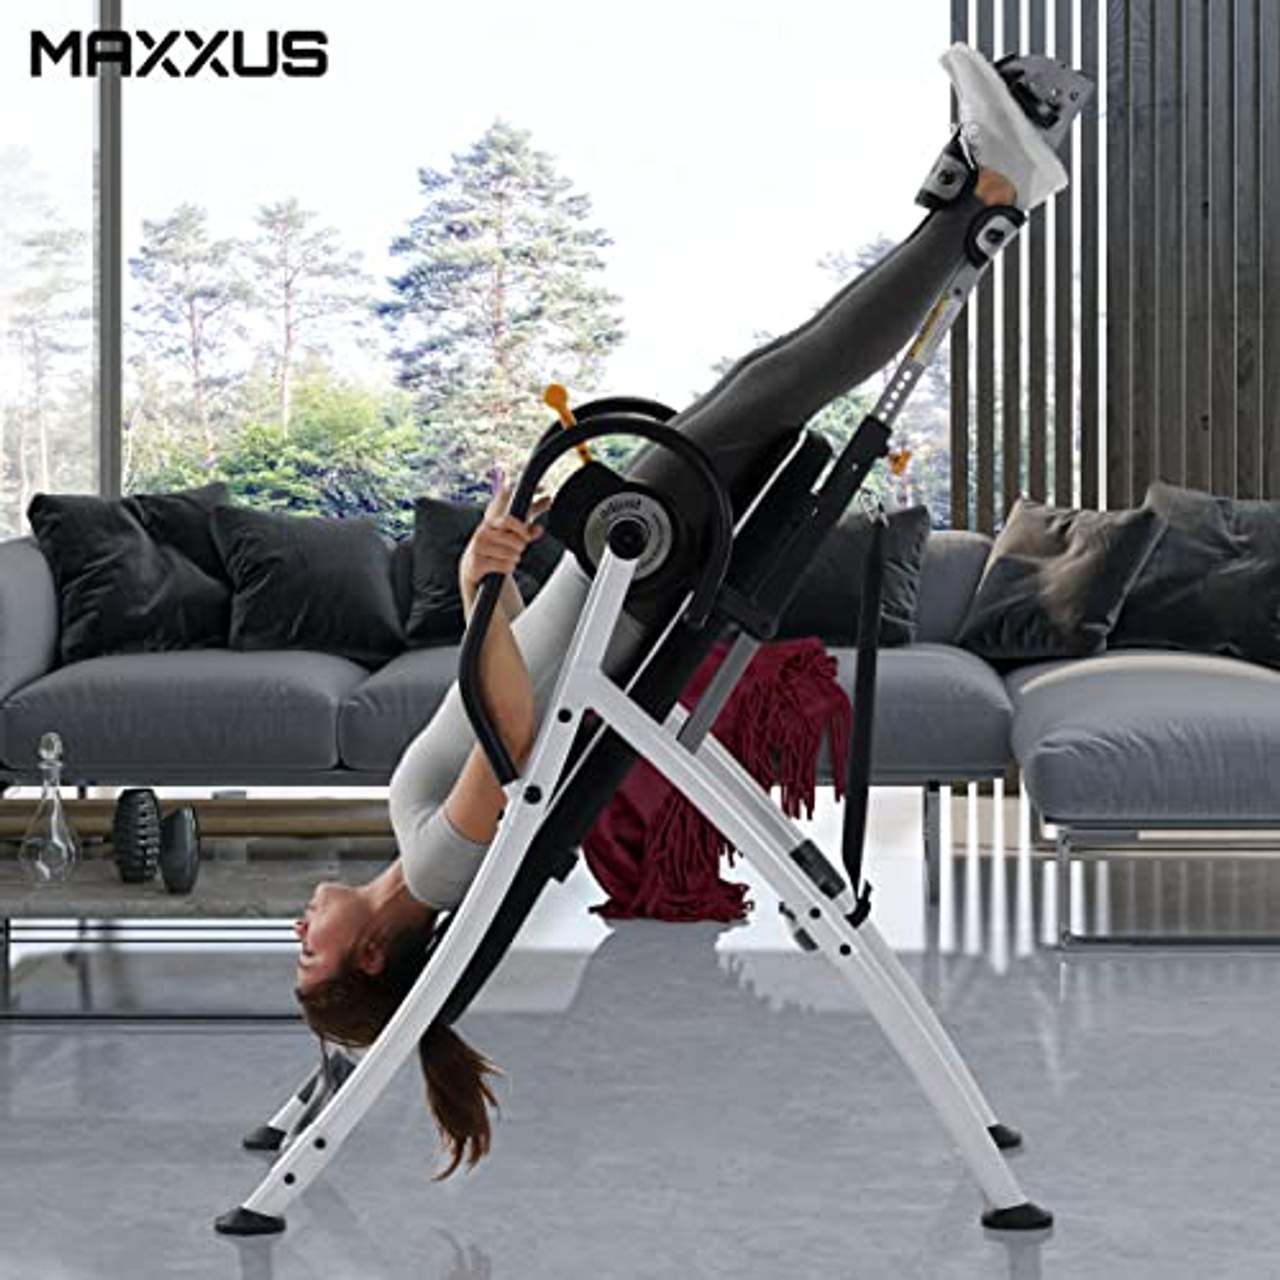 MAXXUS Gravity Pro 2